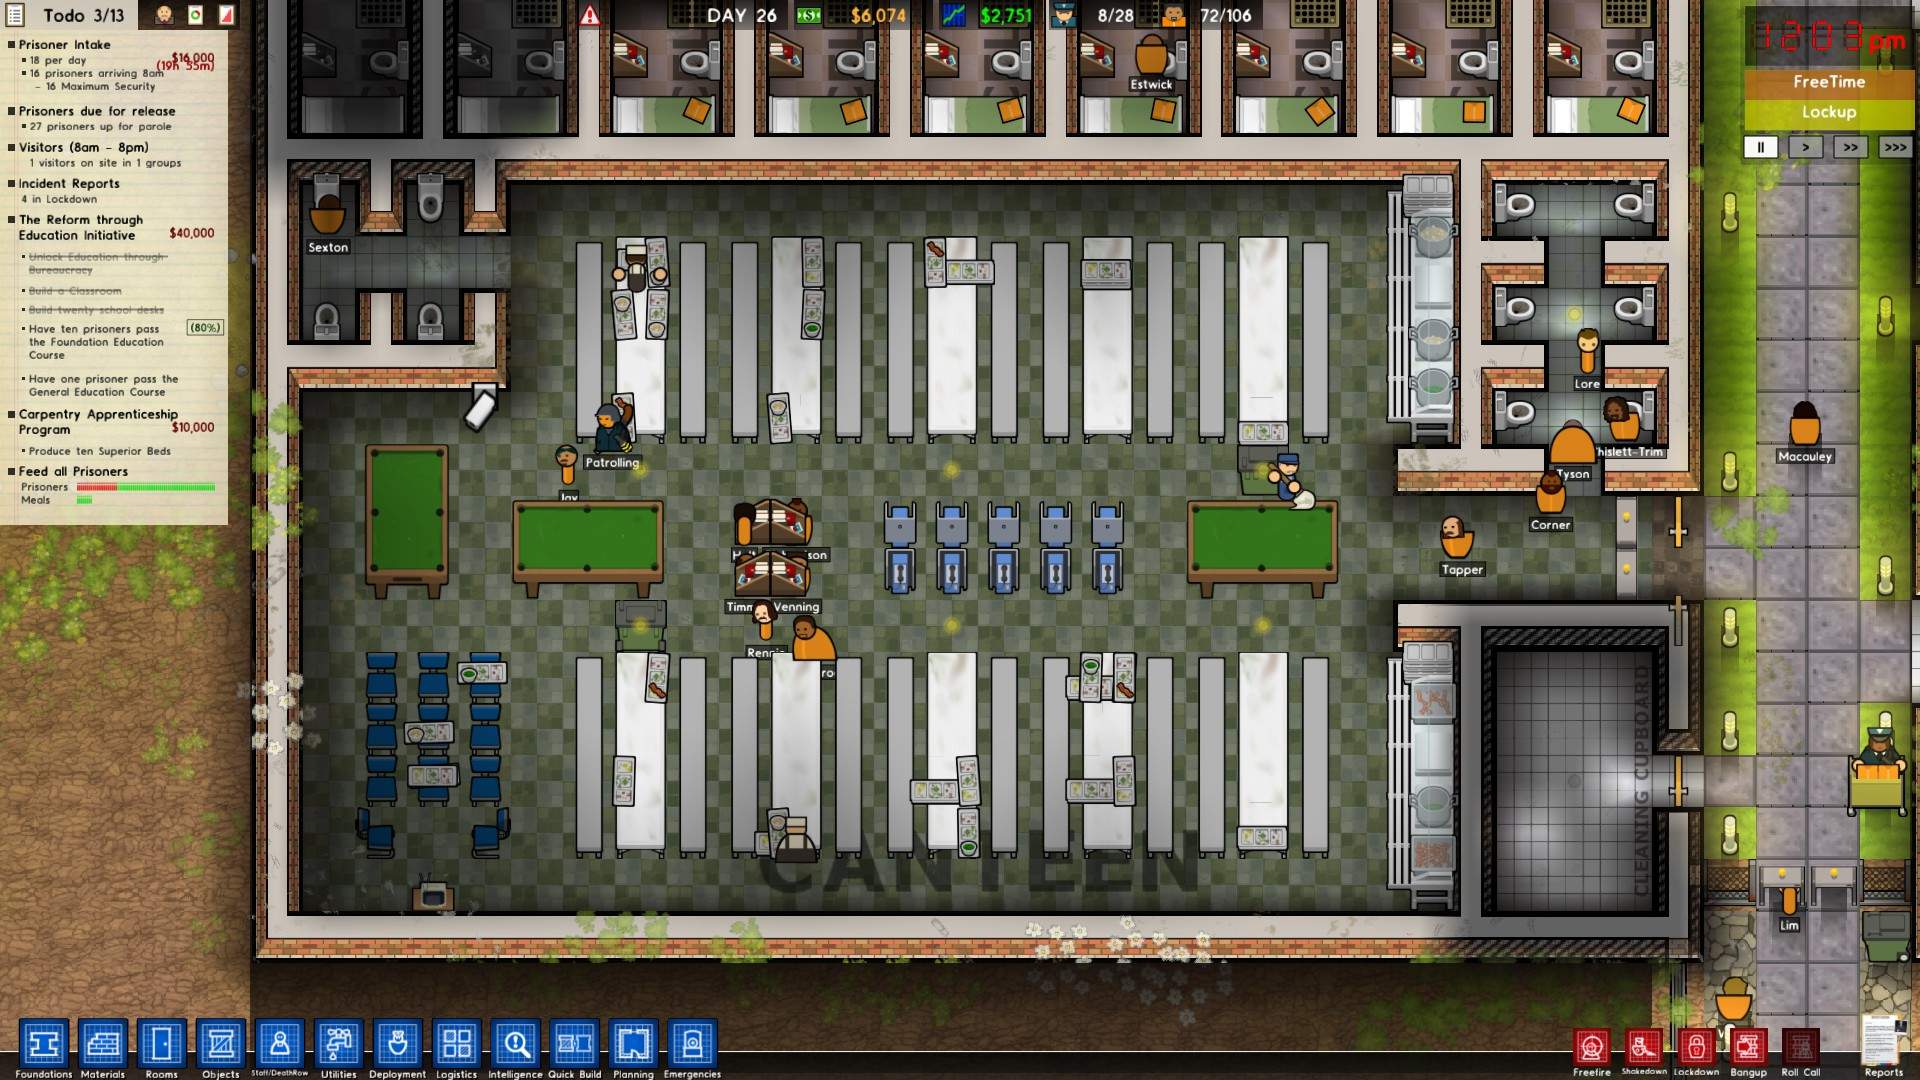 Prison architect layouts